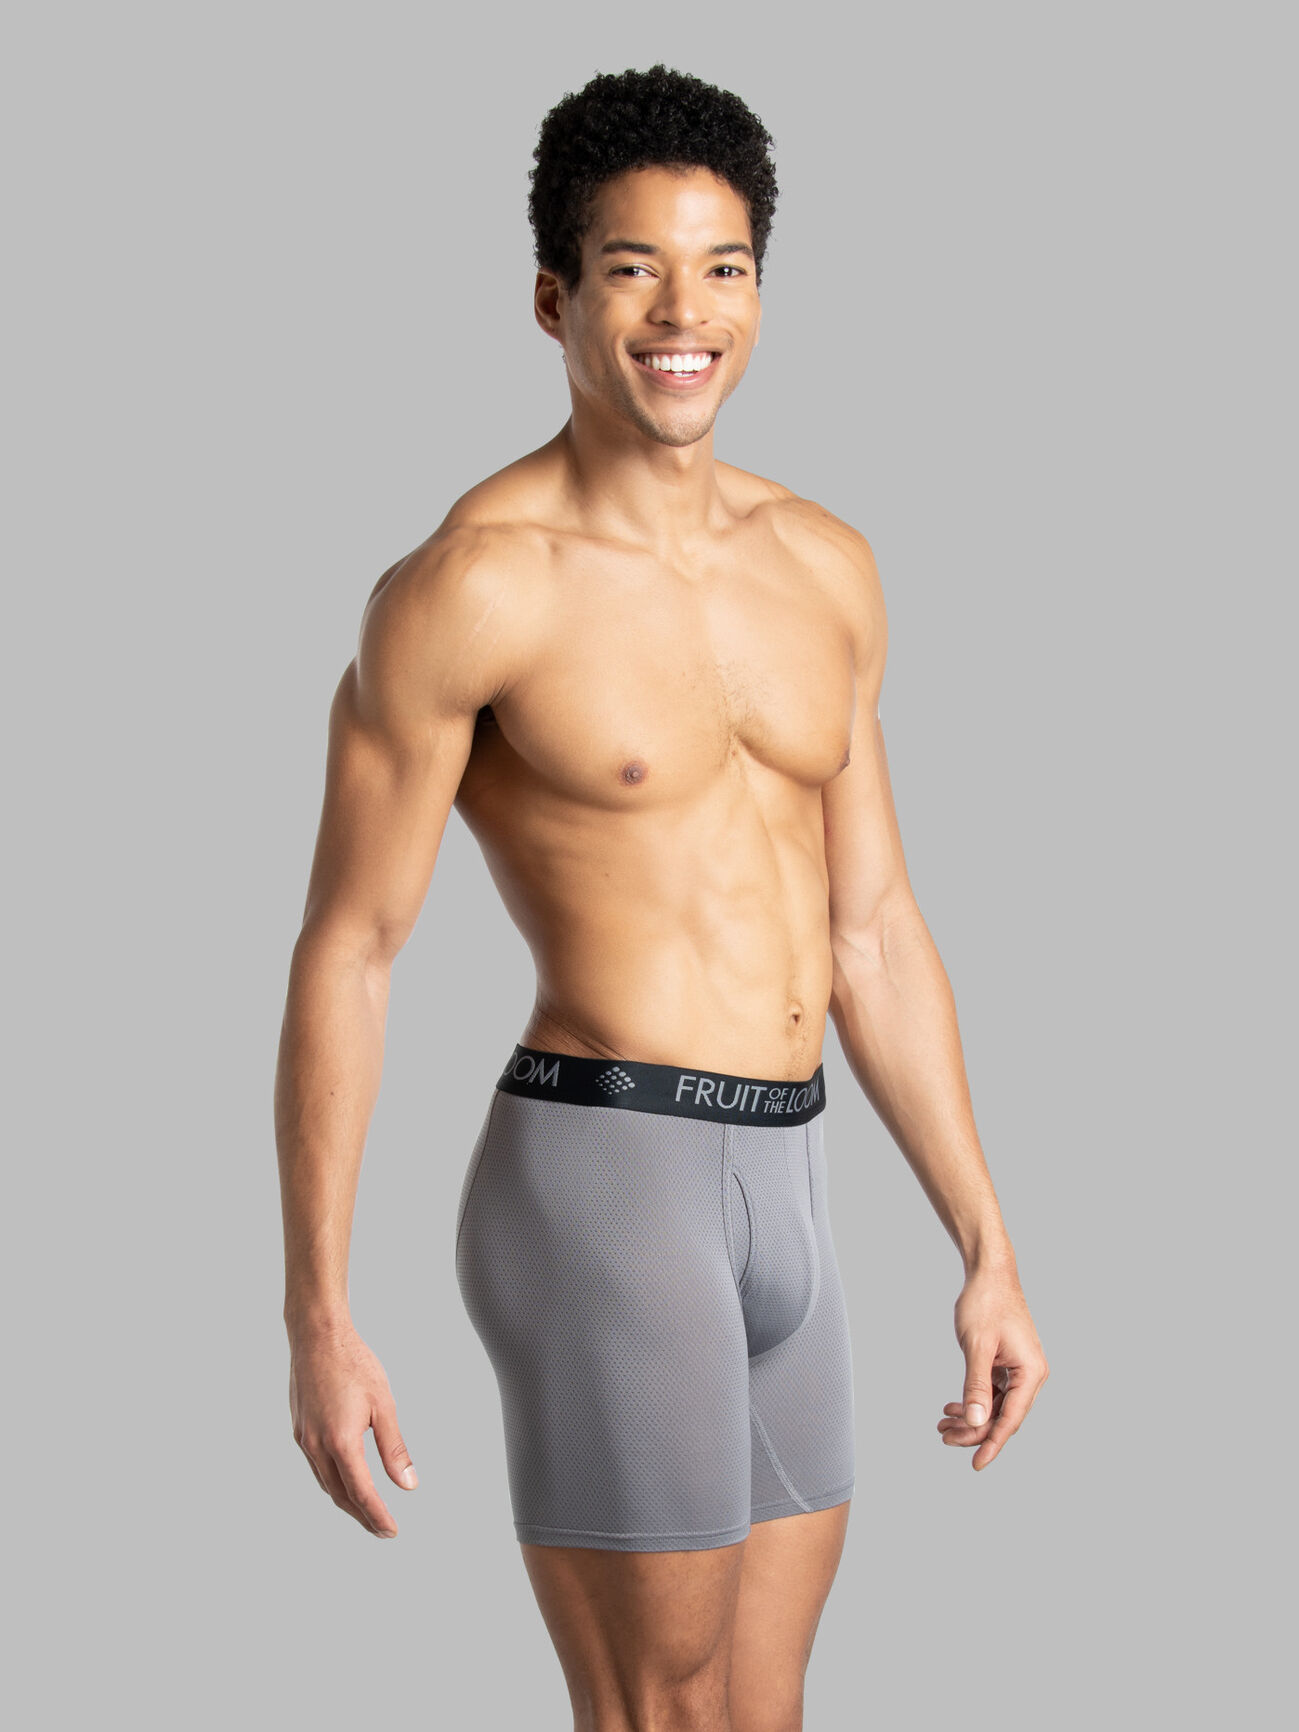 4-Pack Men's Athletic Underwear - Performance Boxer Briefs For Men Pack -  Anti Chafing Underwear Men